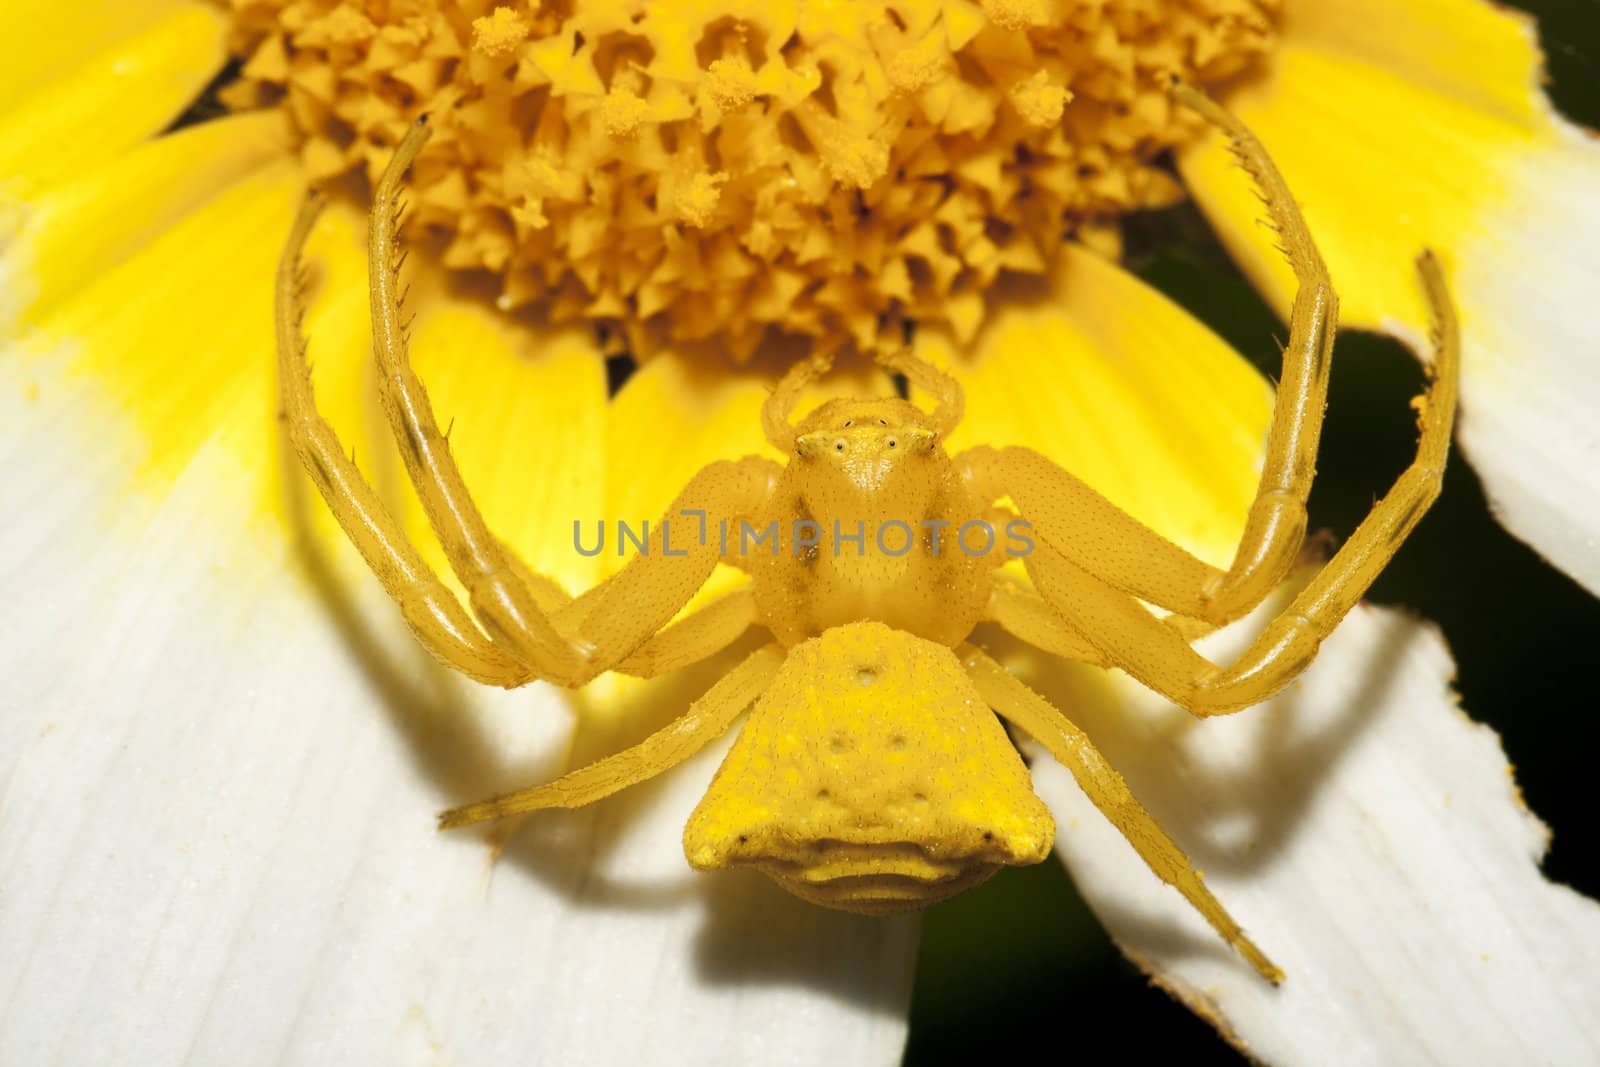 Yellow crab spider (Thomisus onustus) by membio